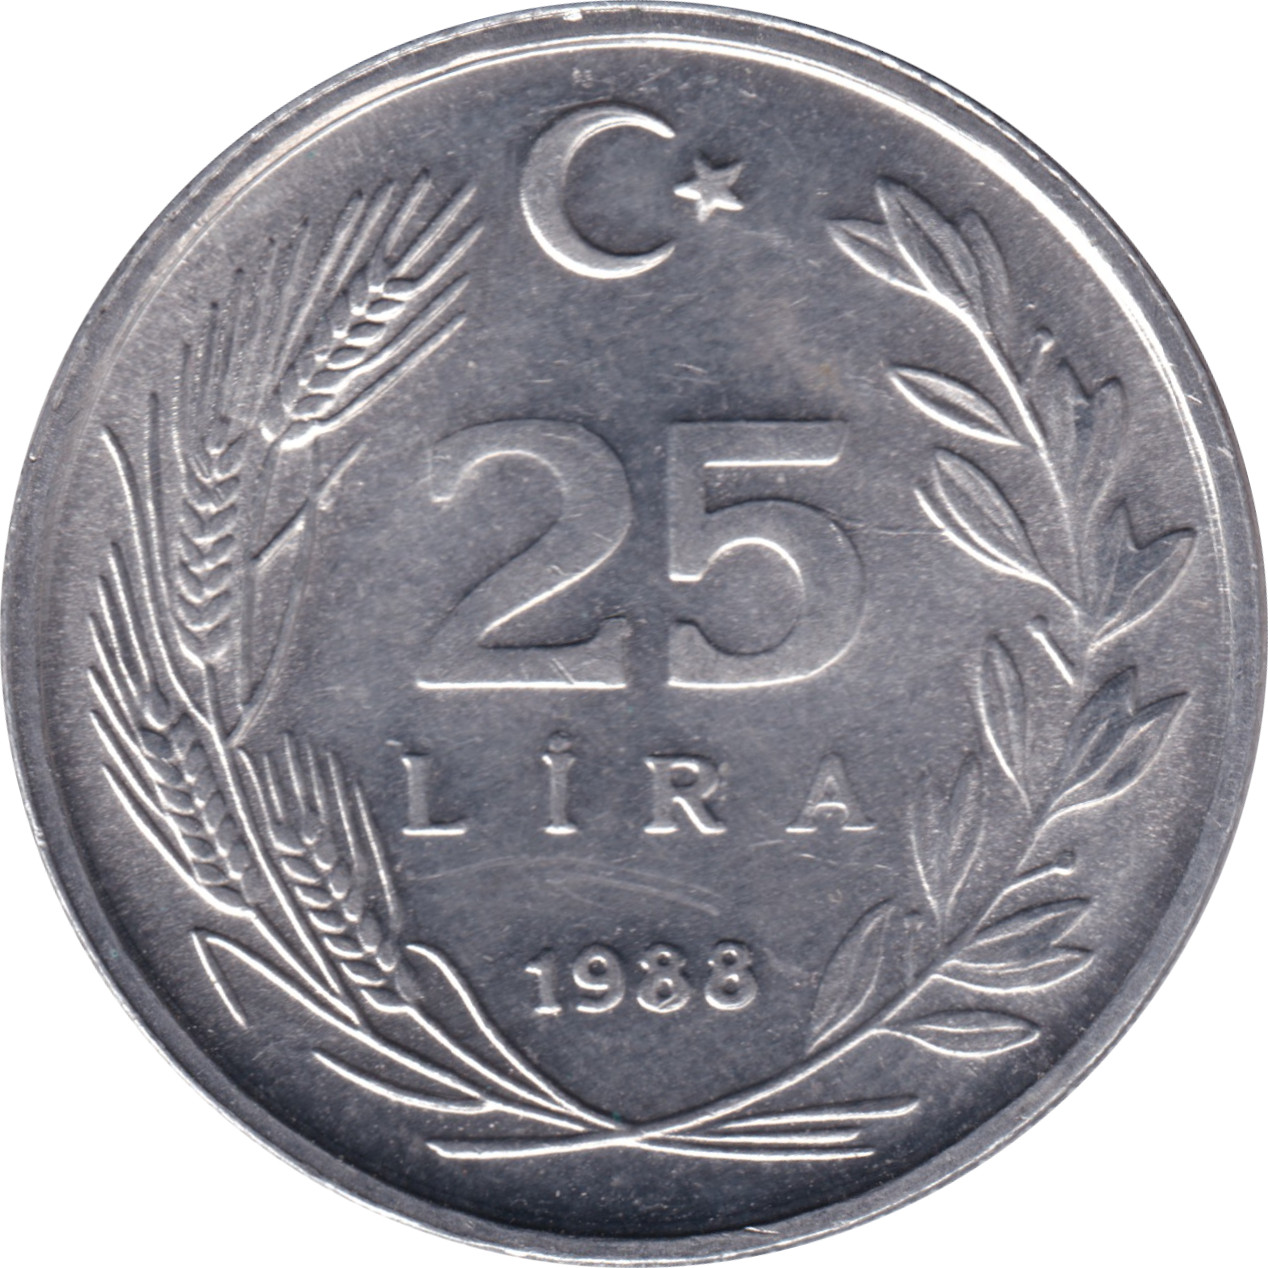 25 lira - Moustafa Kemal